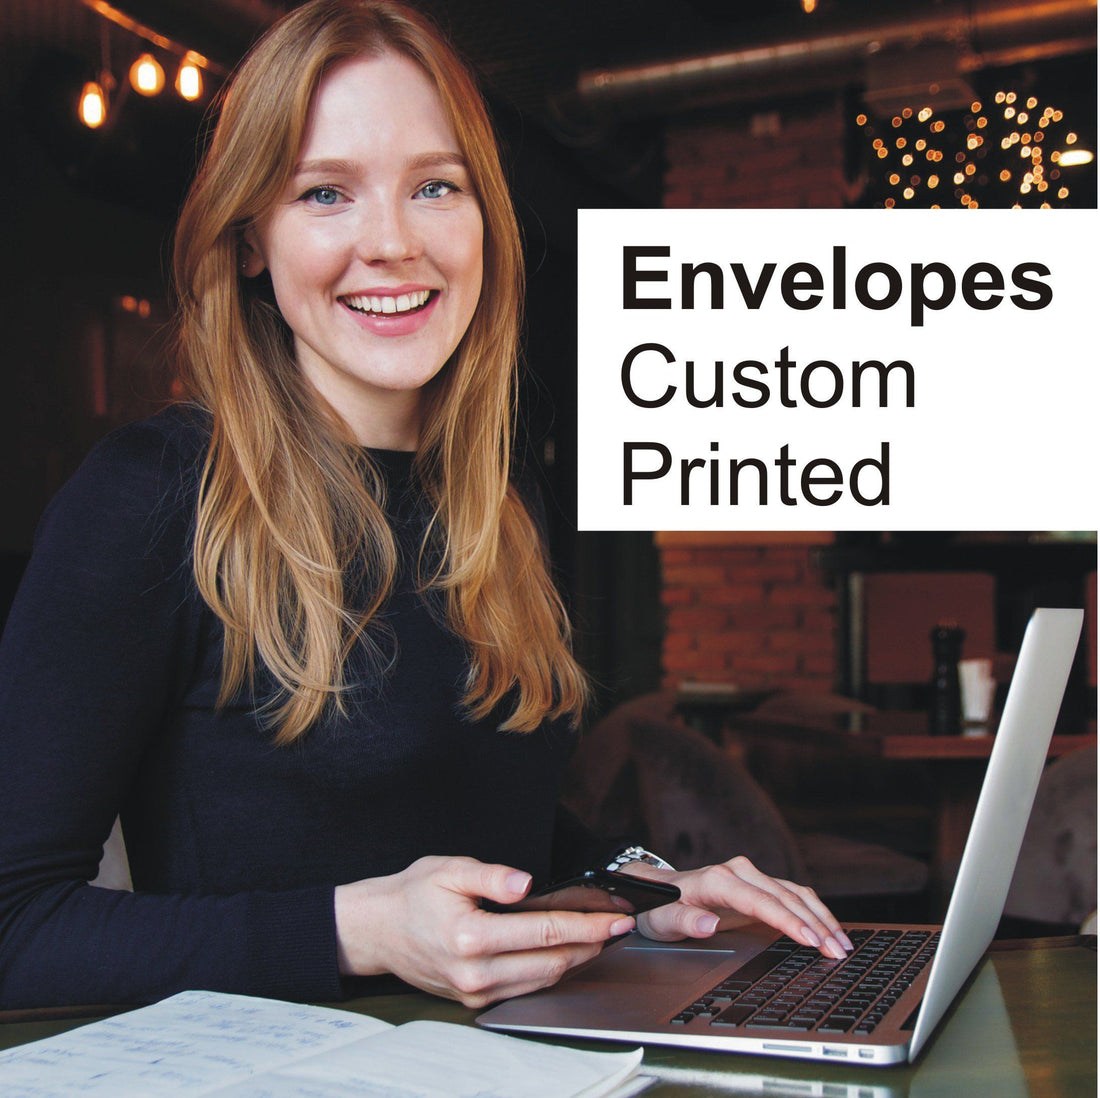 Do you need to order Printed Envelopes?